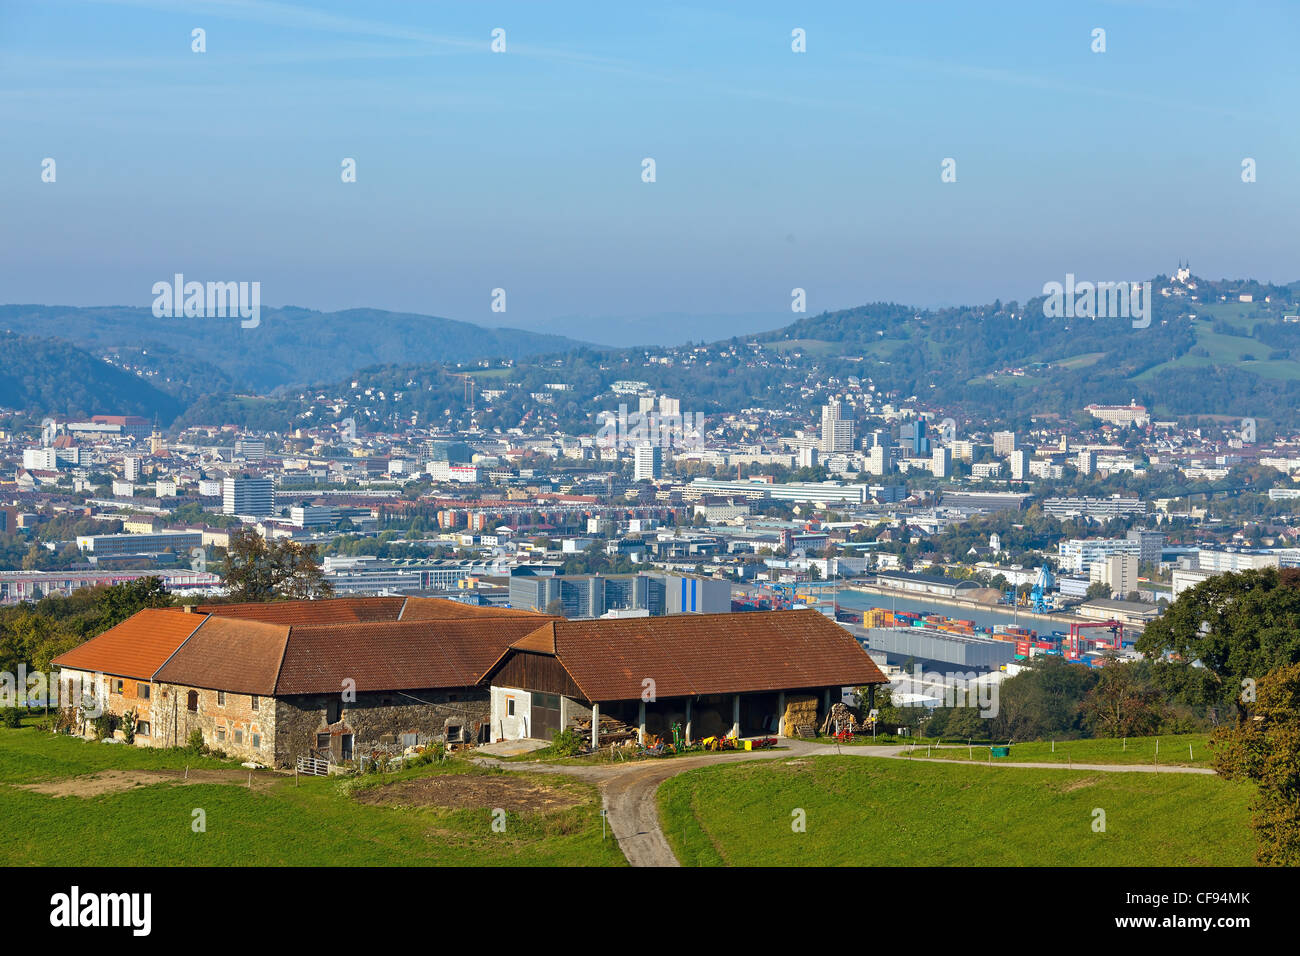 austria, upper austria, linz. view of the city with farm Stock Photo